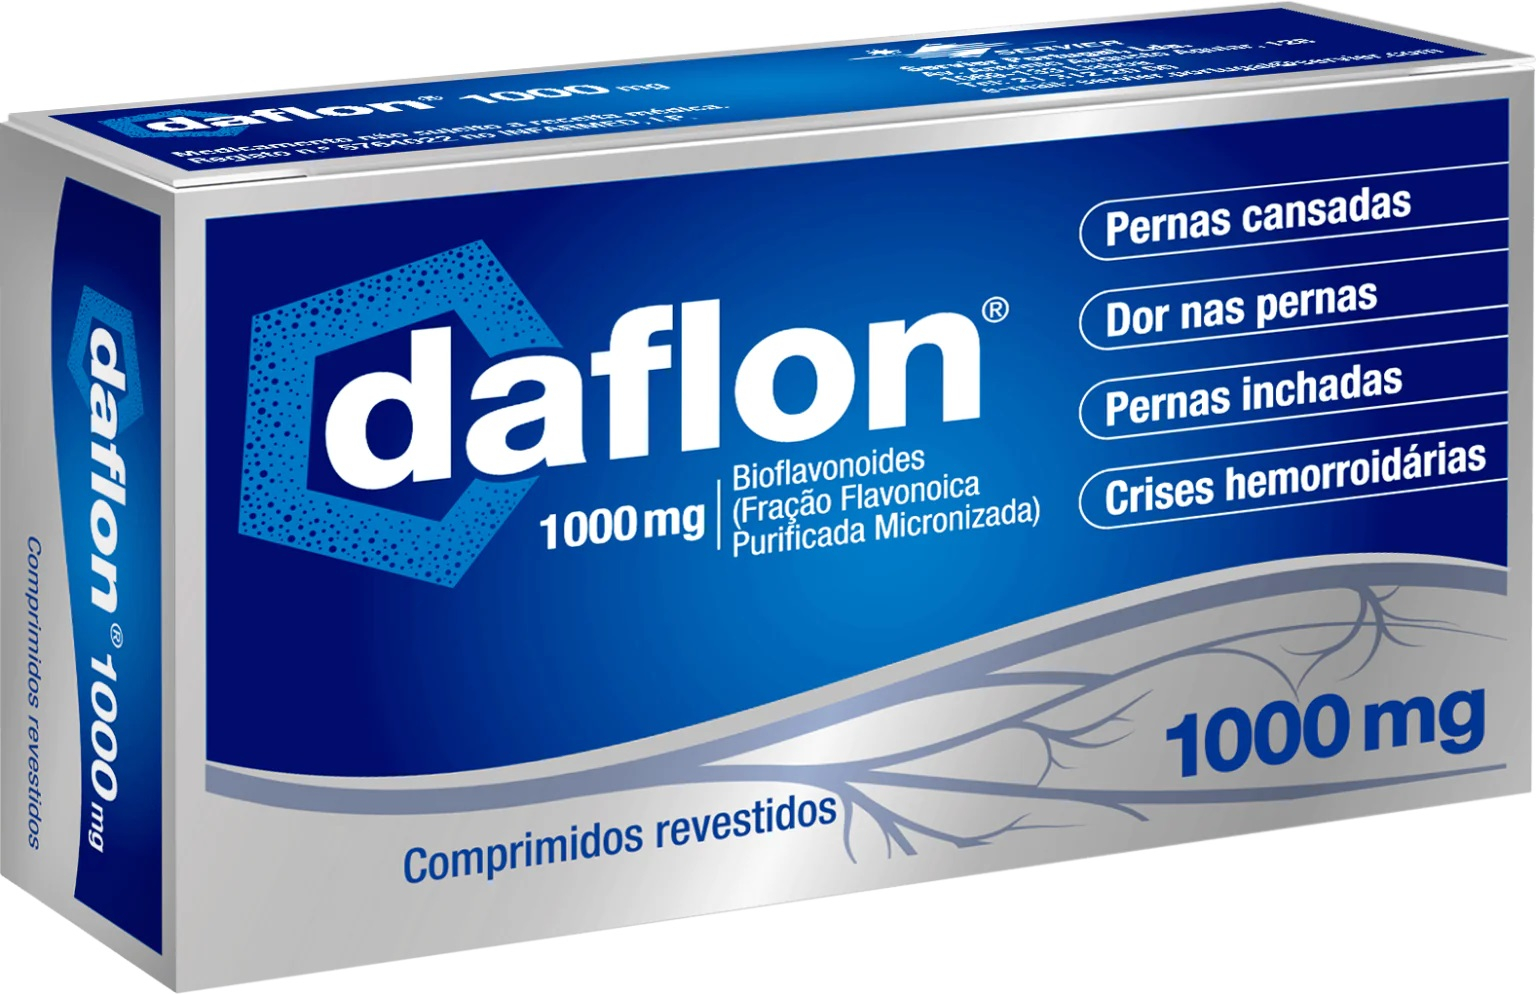 Daflon 1000mg Servier 30 comprimidos revestidos